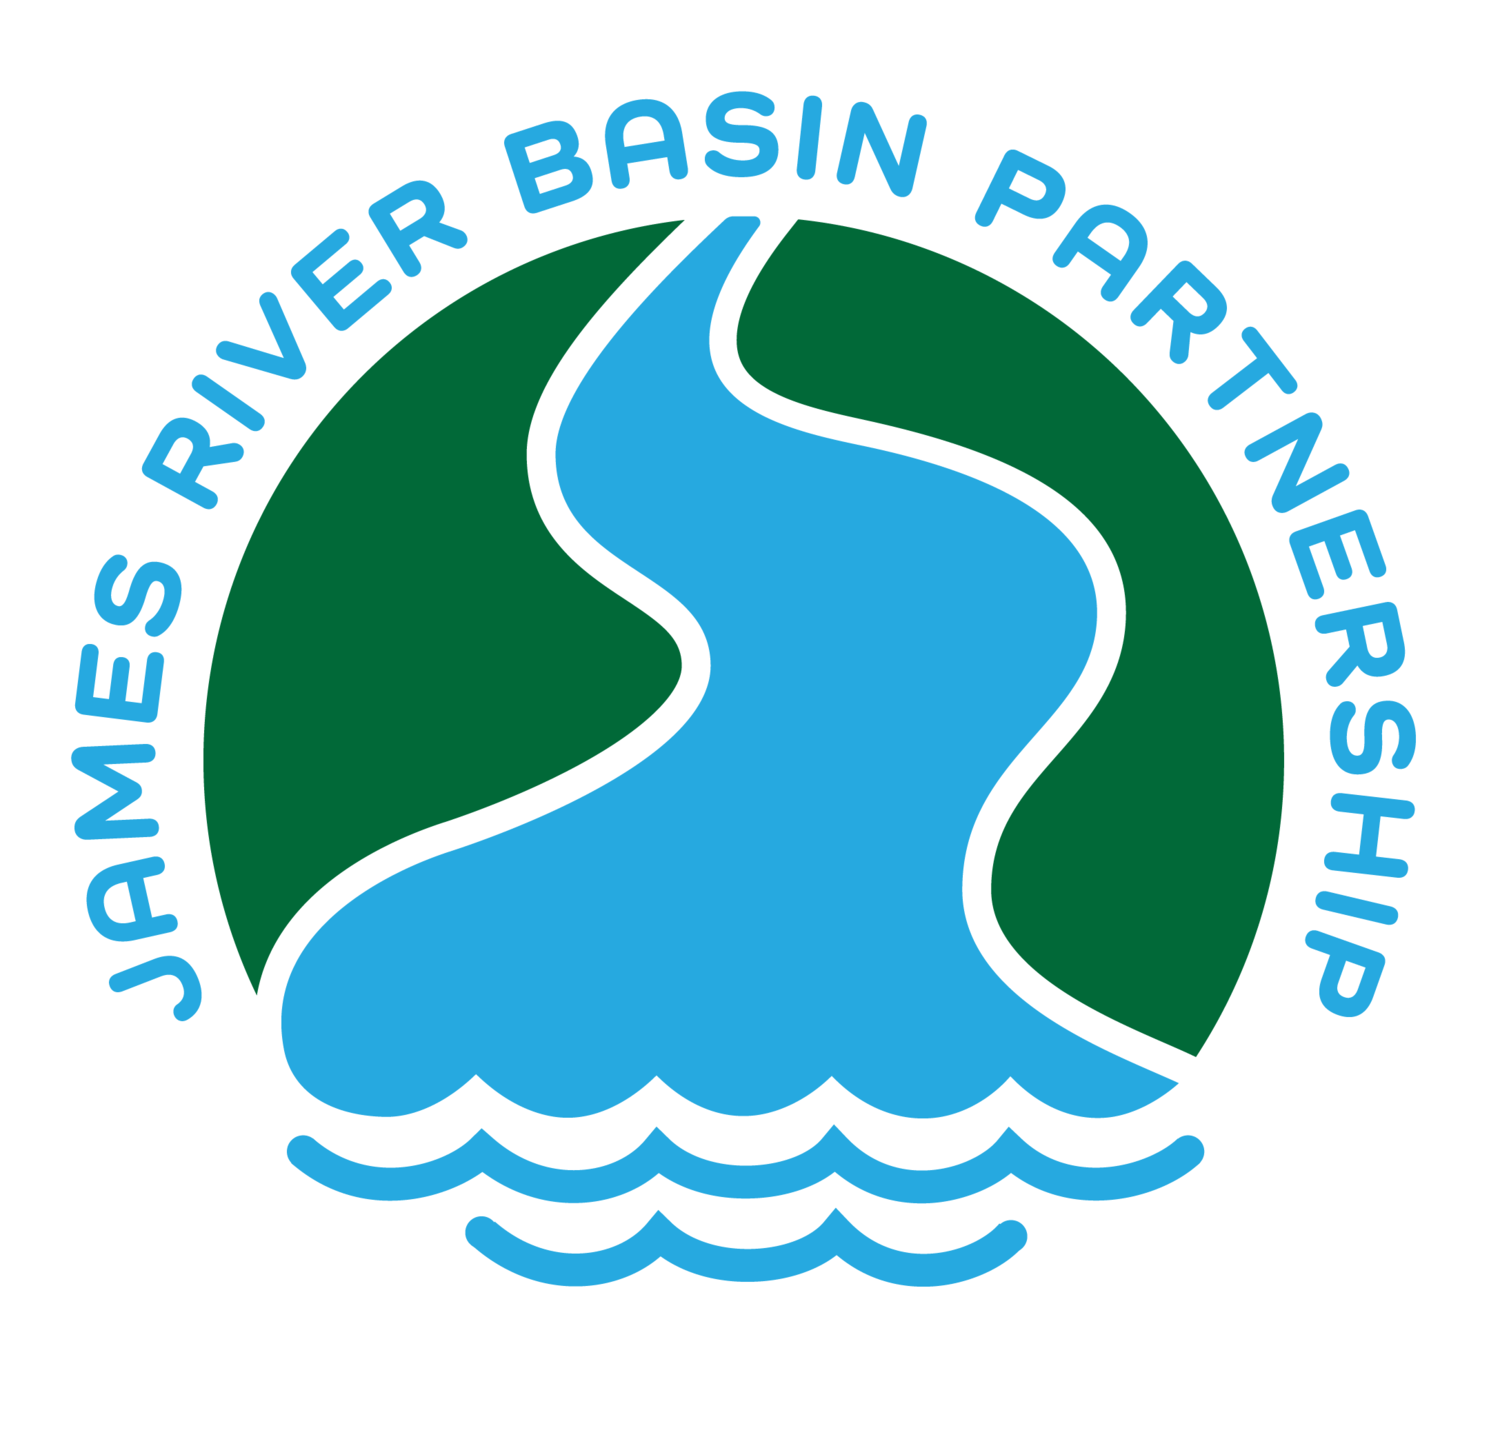 James River Basin Partnership